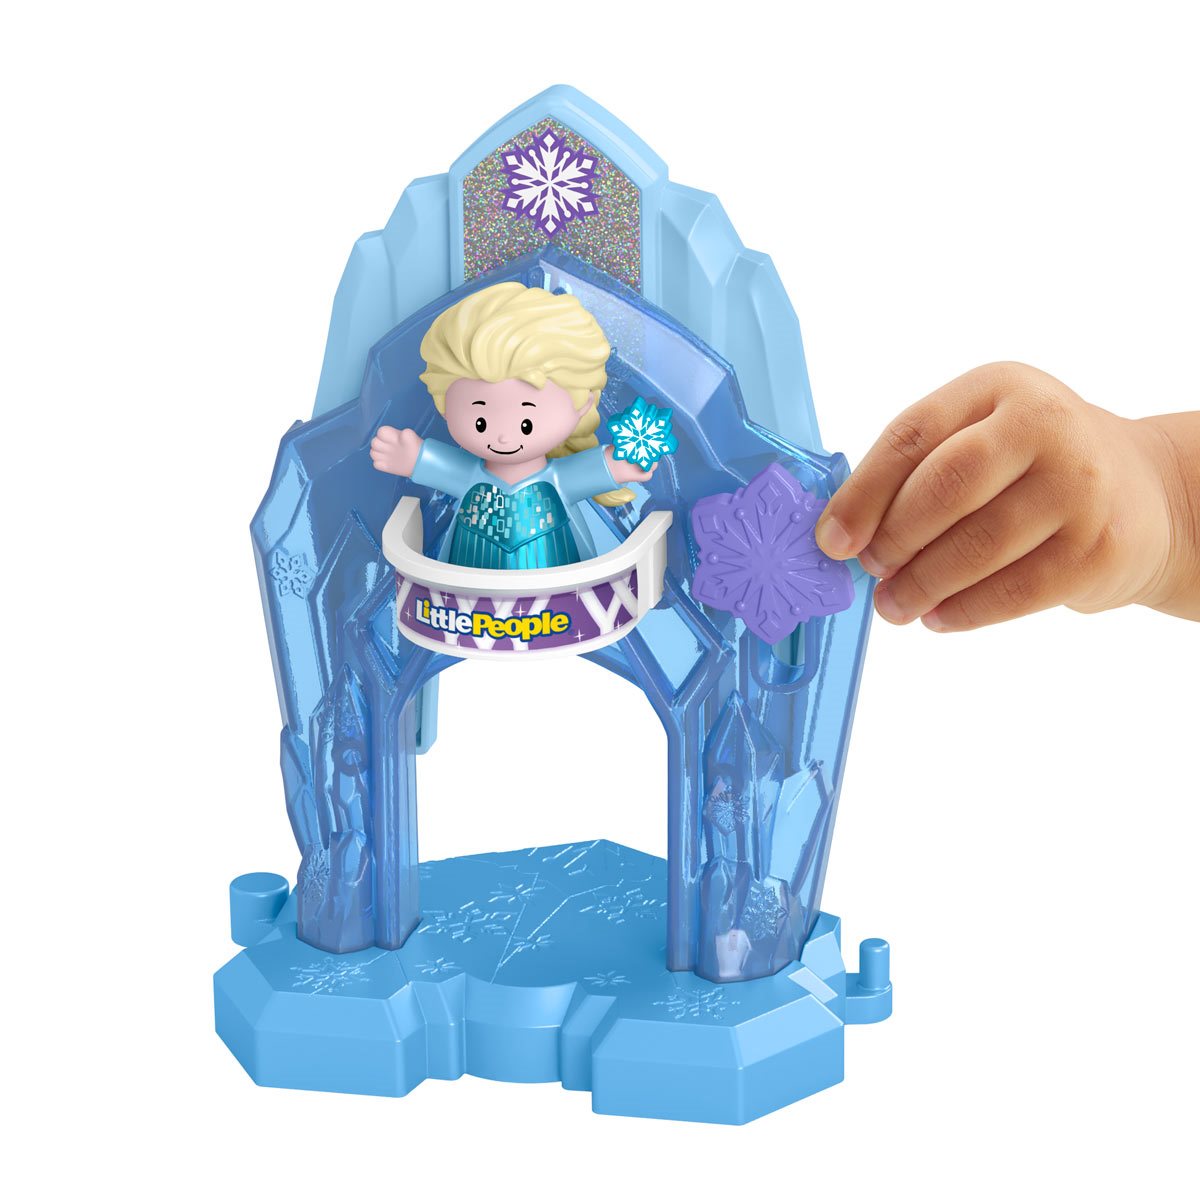 Little People Disney Princess Parade Frozen Anna & Elsa Floats 2019 Mattel for sale online 